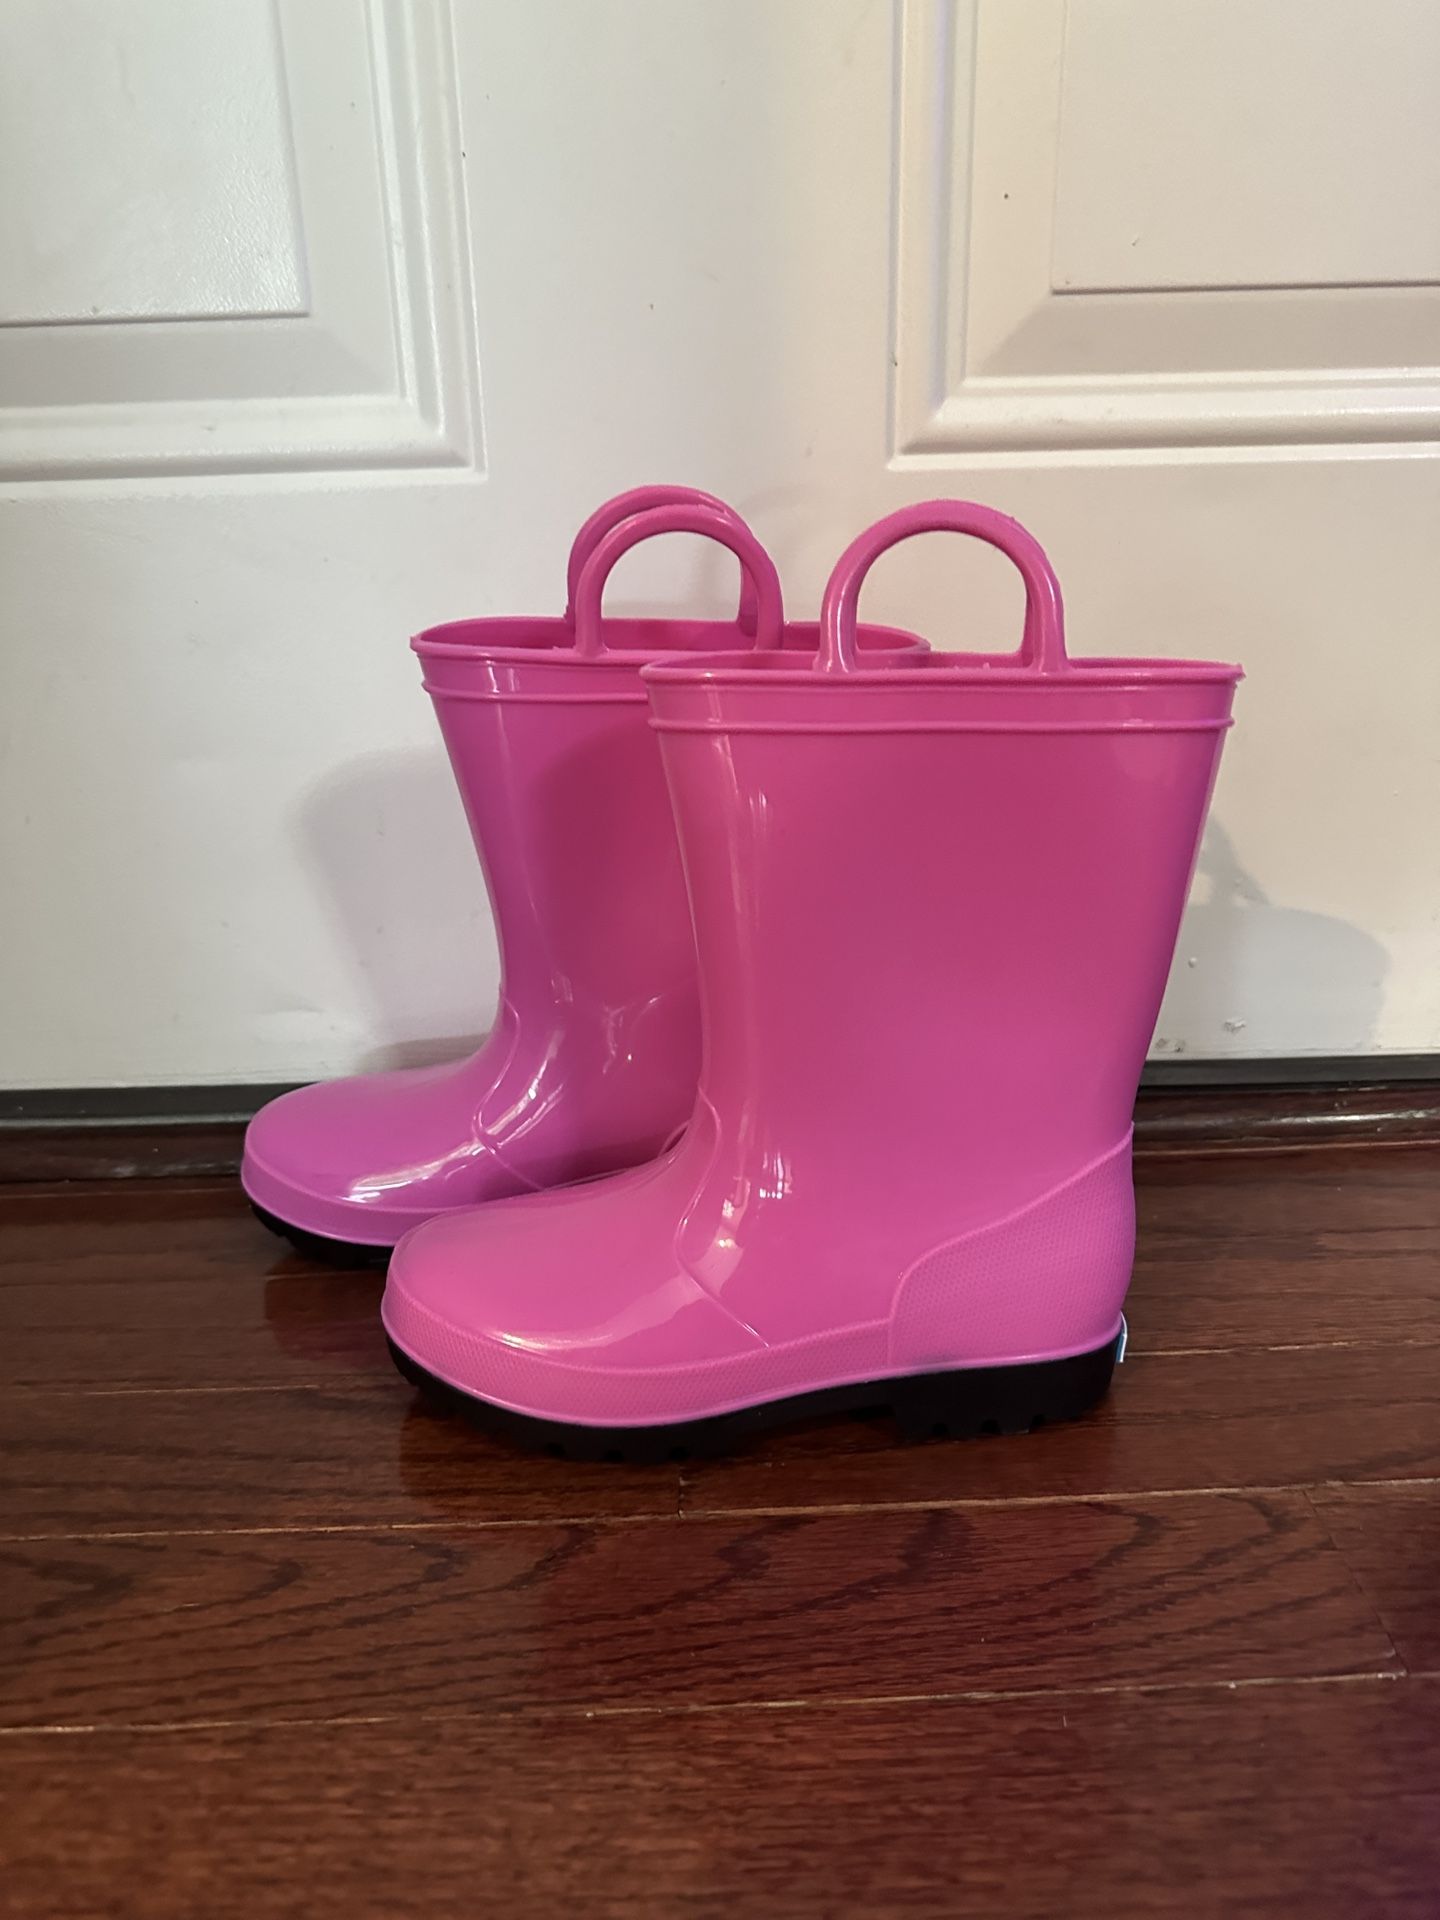 Pink Kids Rain Boots - Size 13C